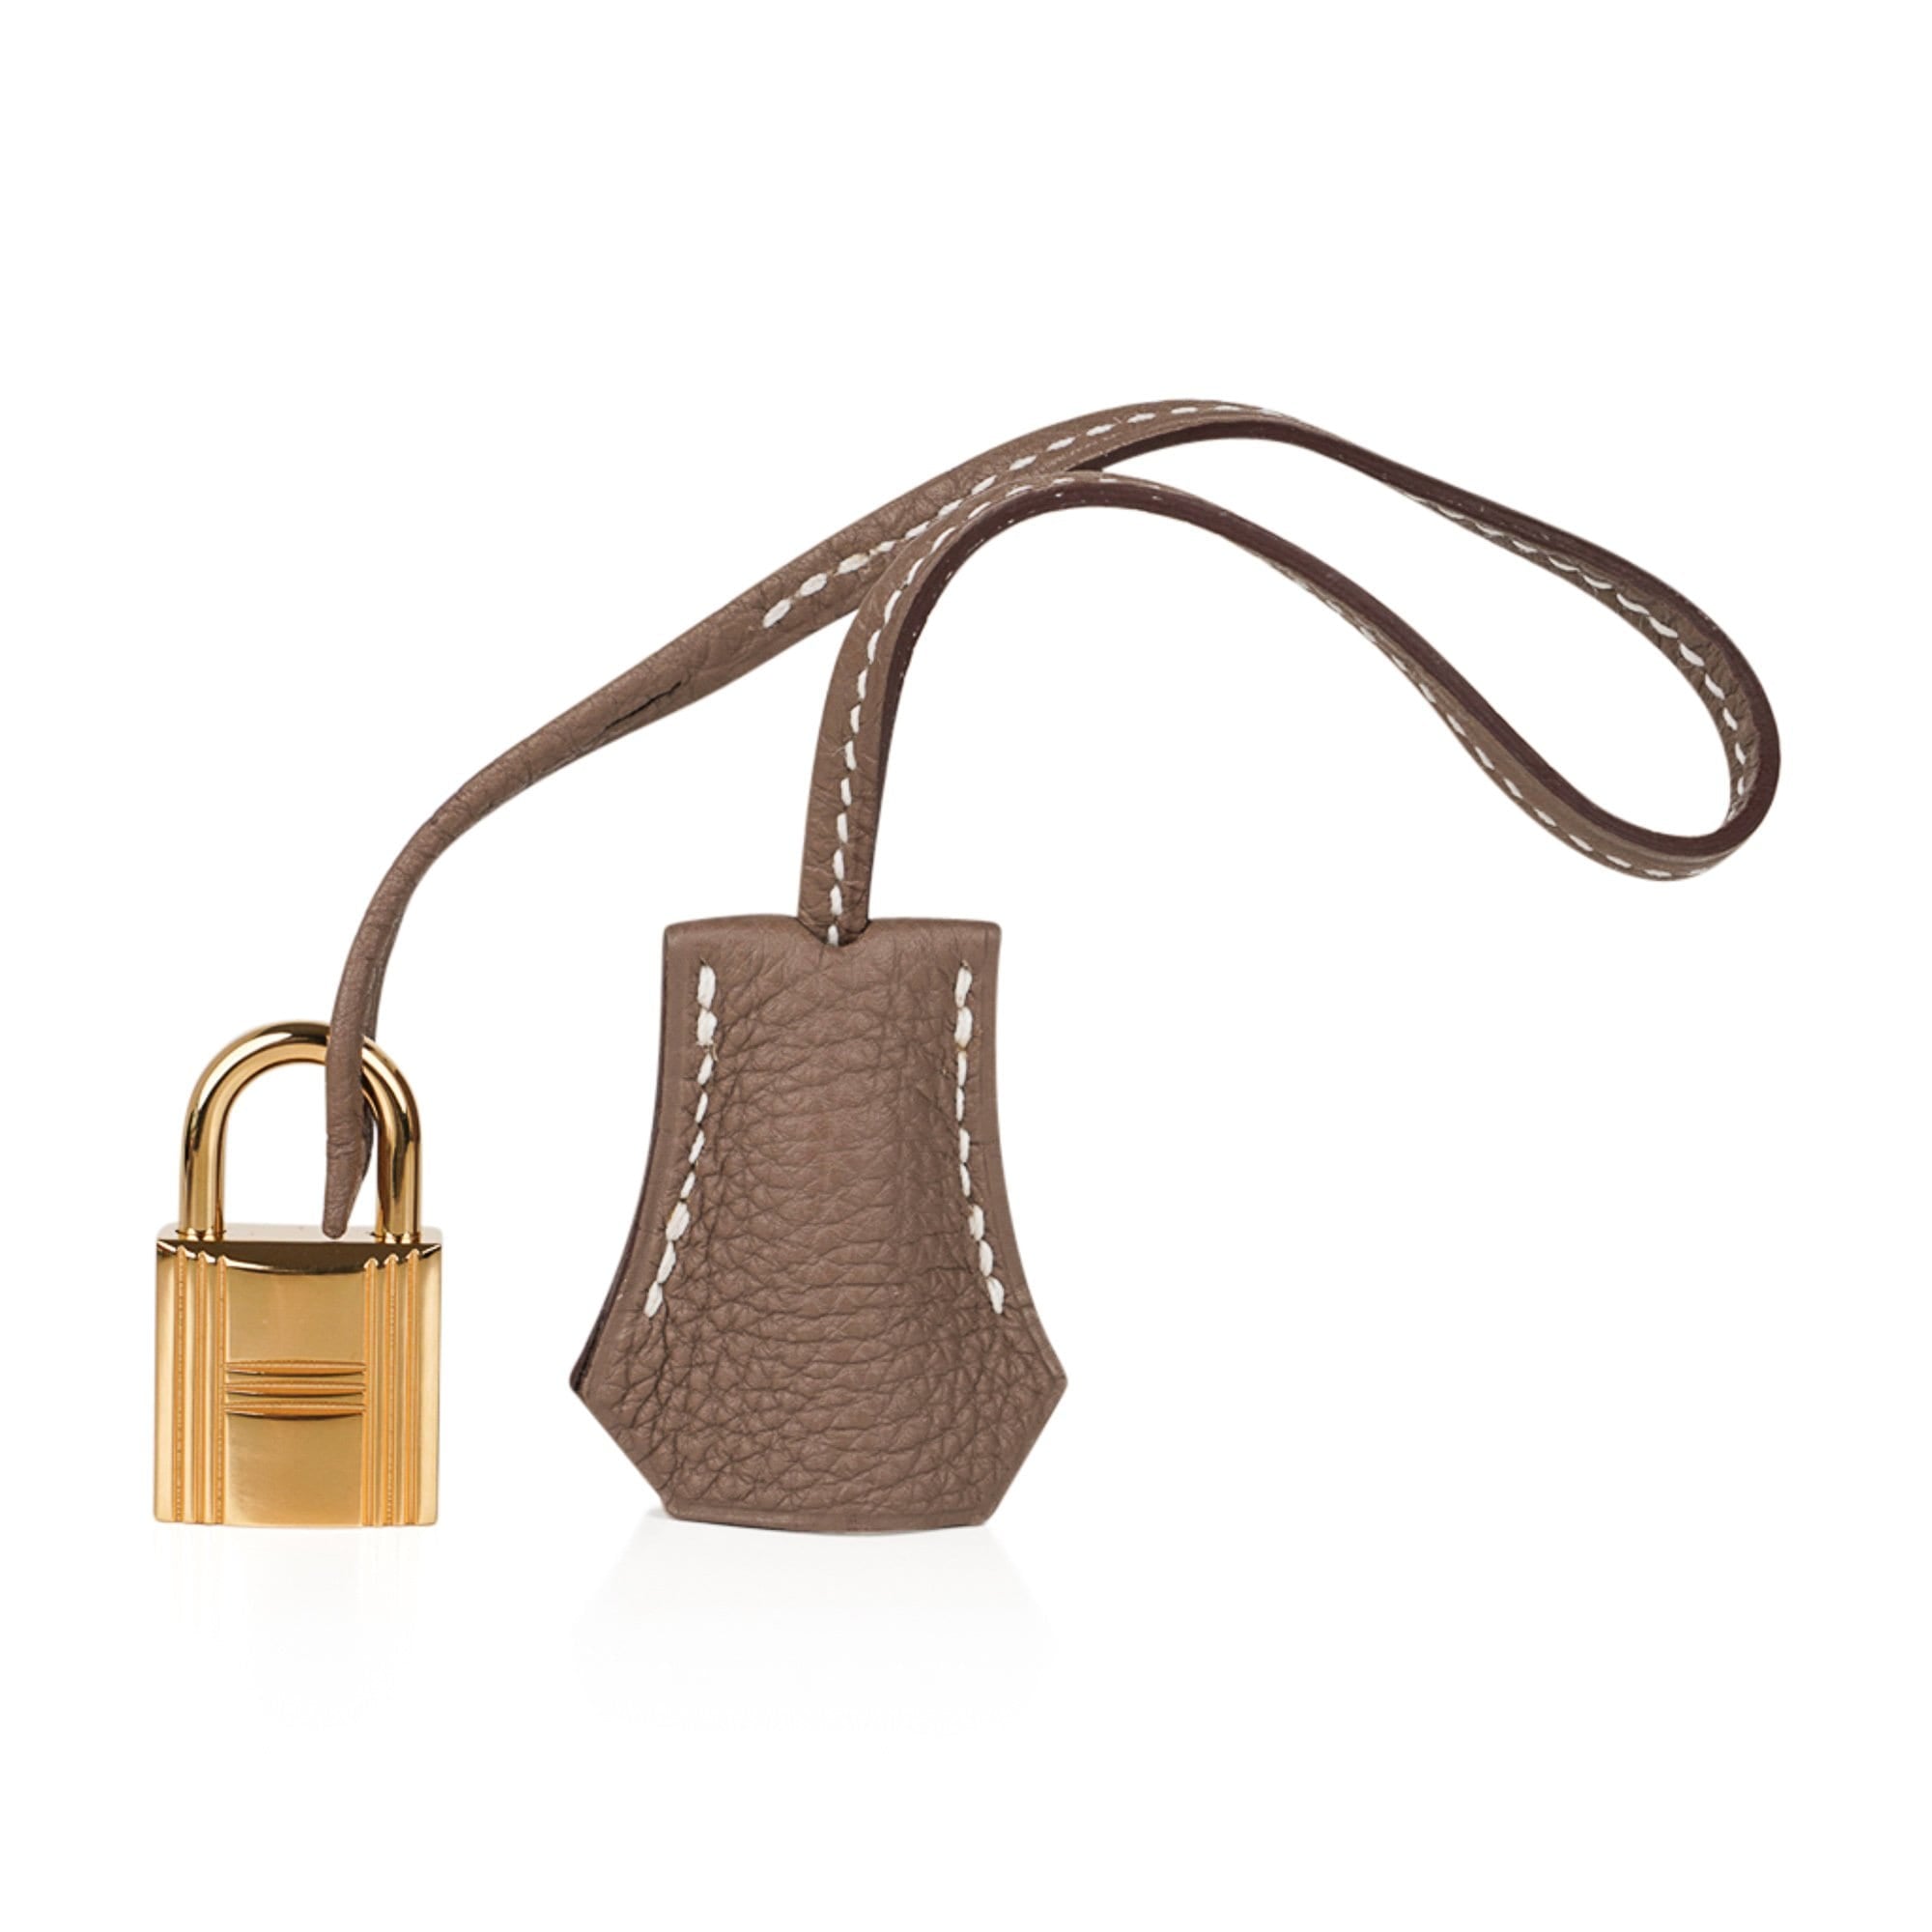 Hermes Birkin 35 Bag Chocolate Togo Gold Hardware • MIGHTYCHIC • 